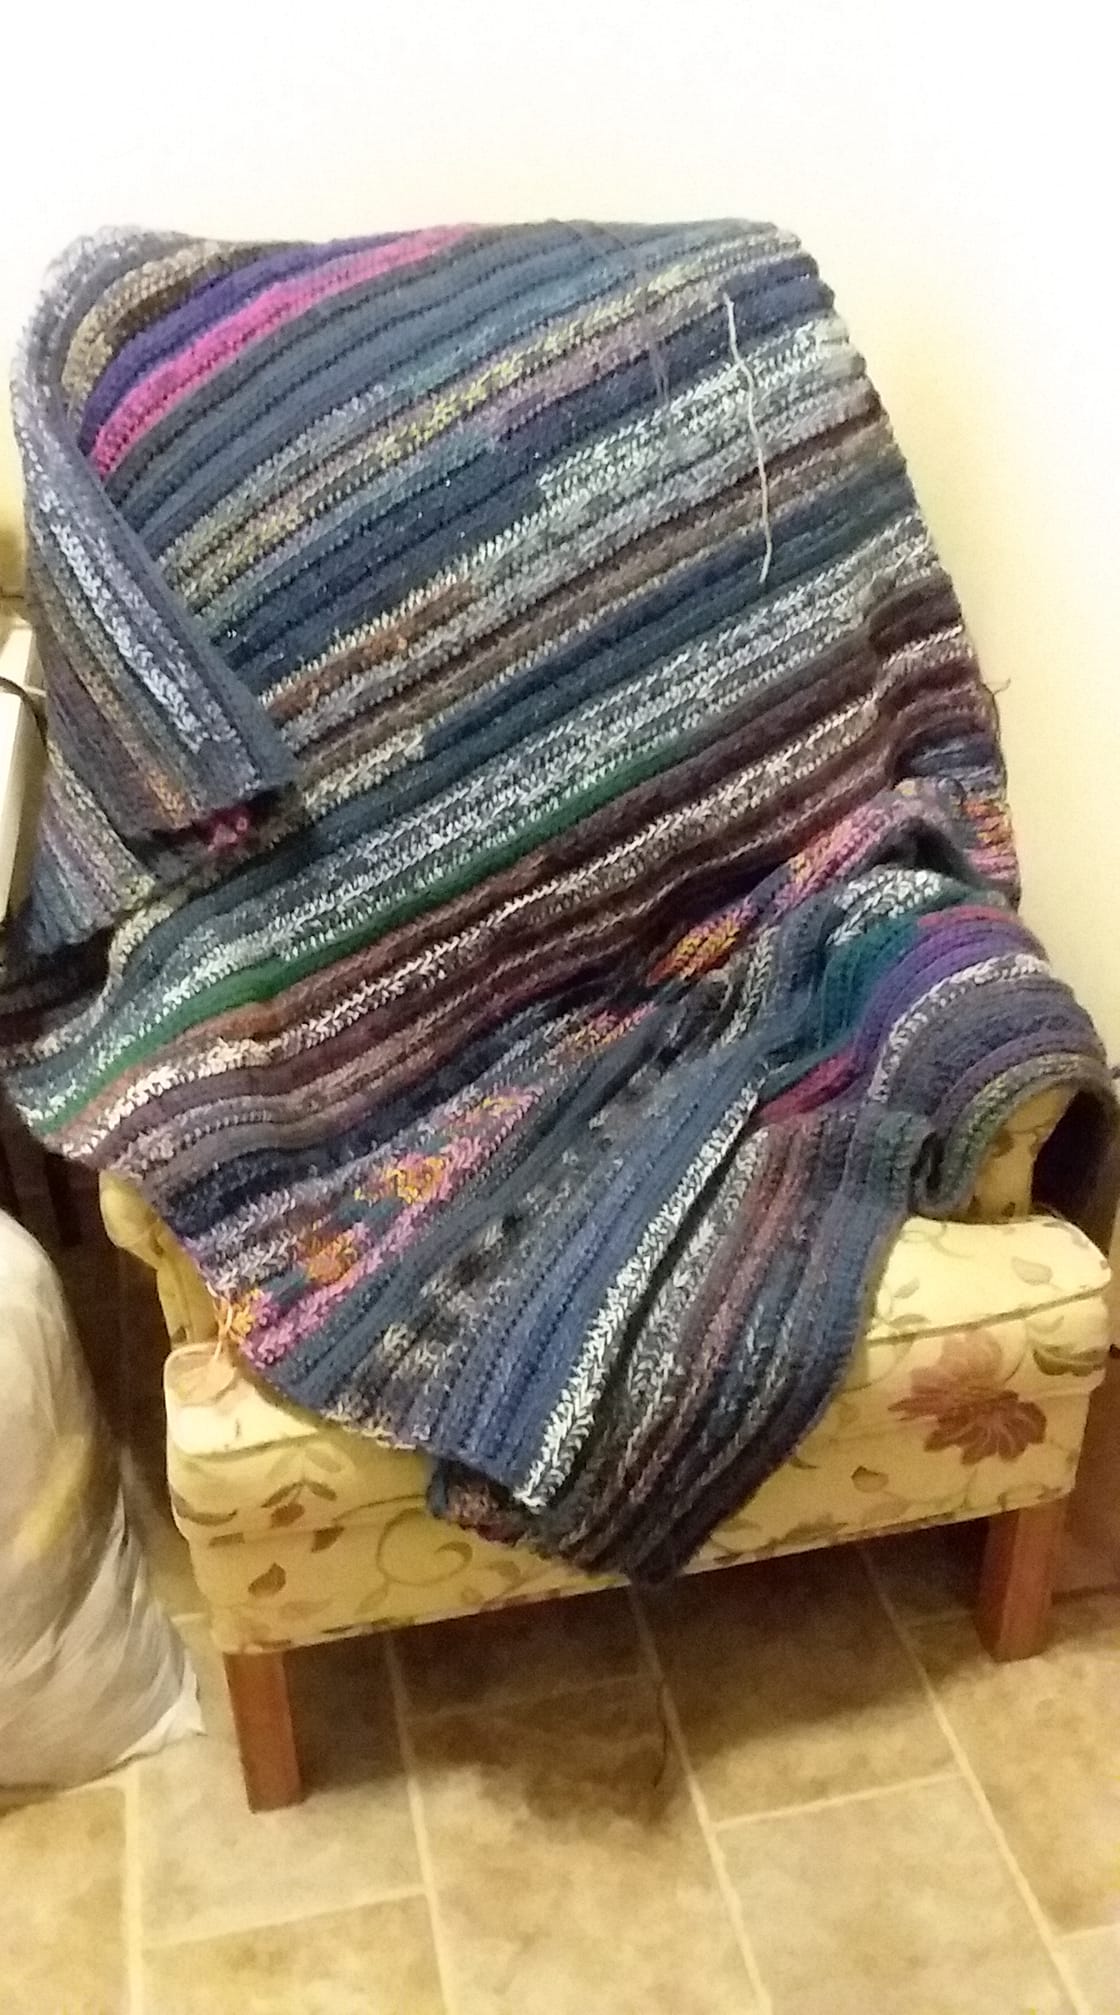 Scrappy Blanket That I Crocheted